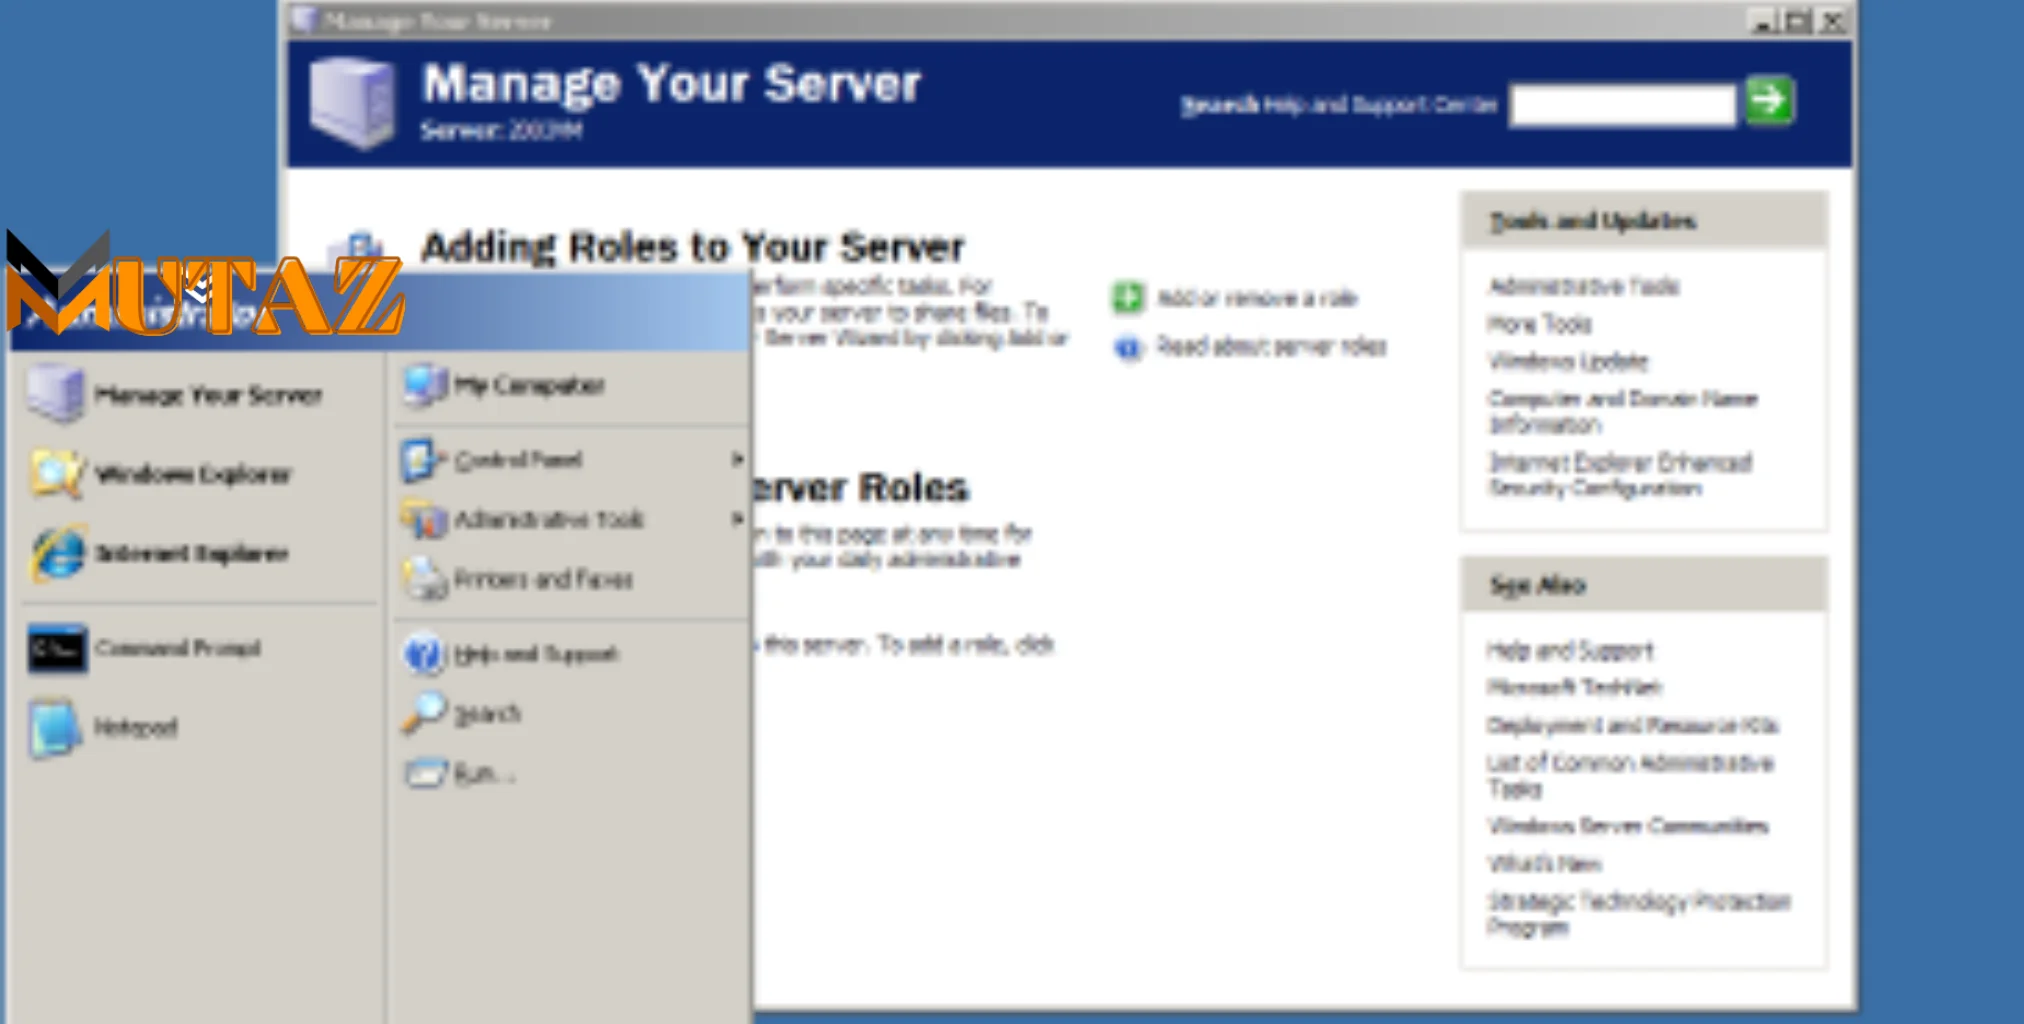 Windows Server 2008 R2 SP1